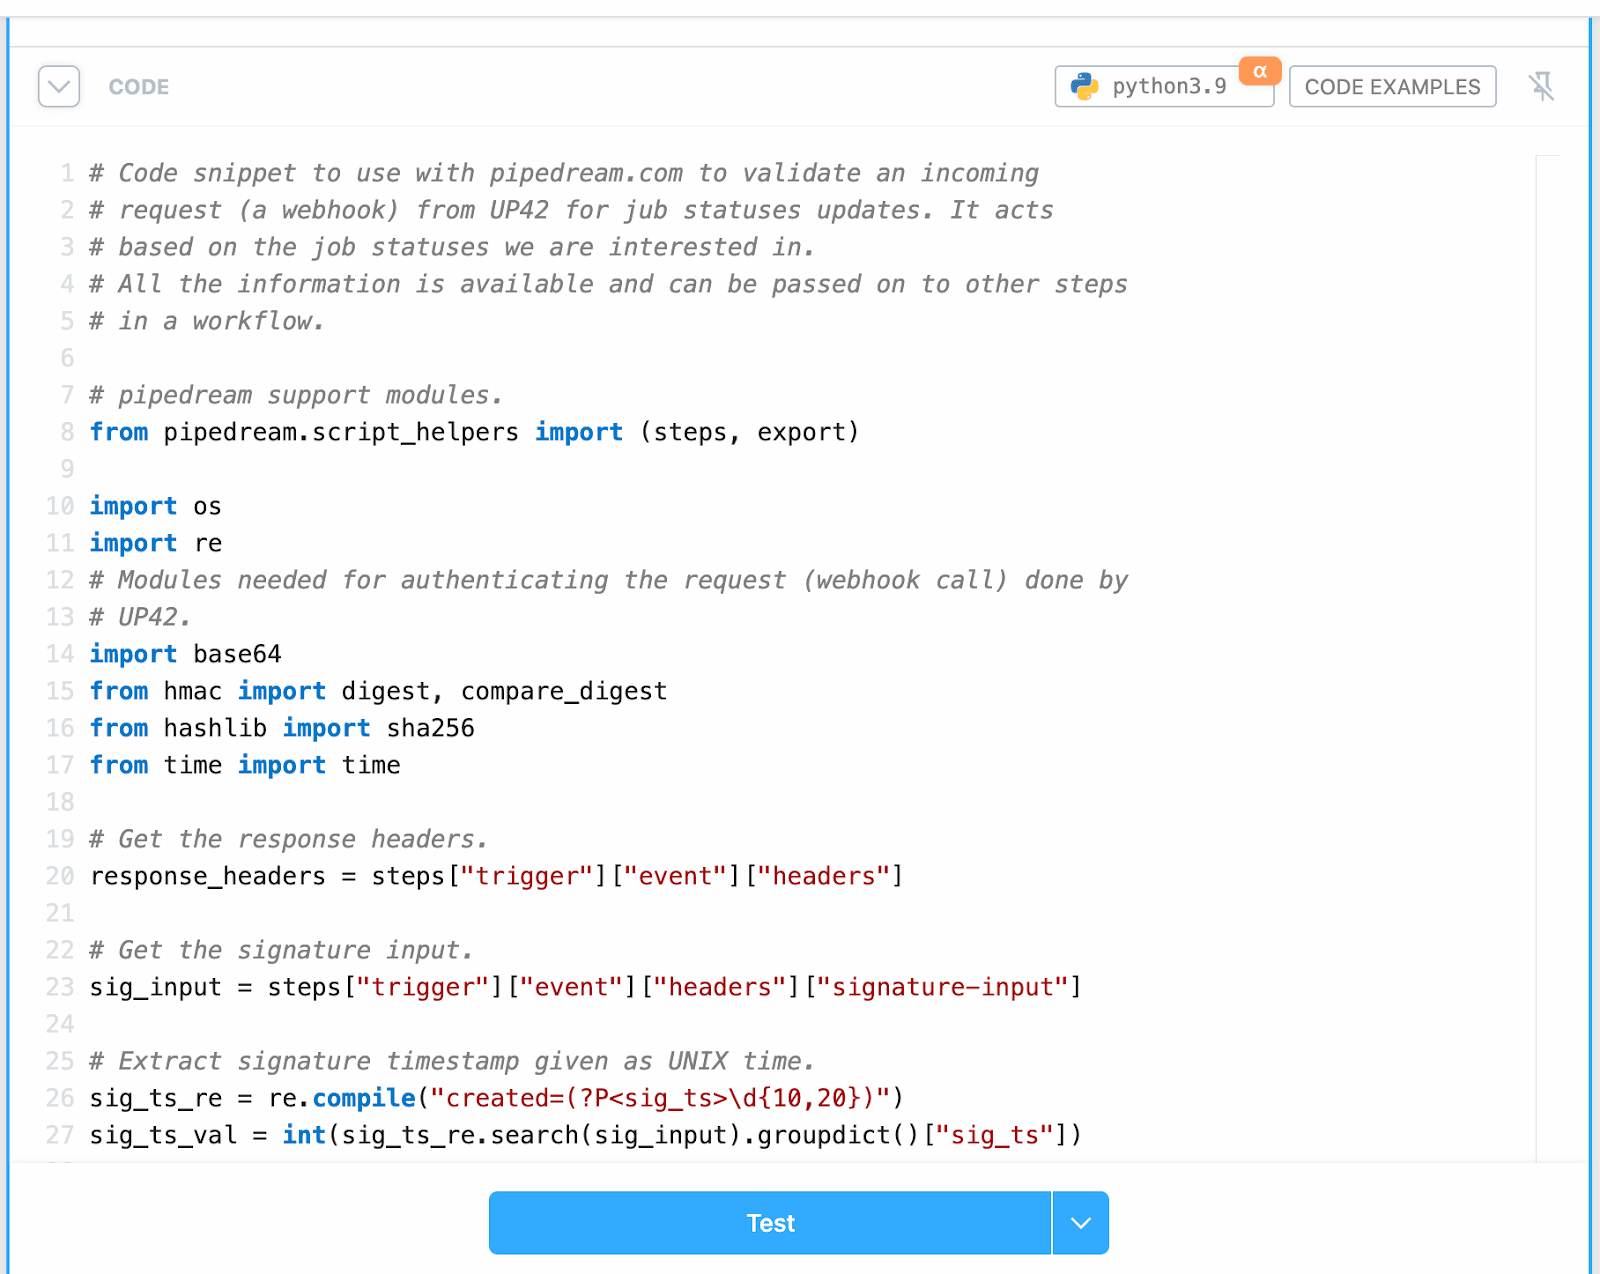 Adding the custom Python code snippet